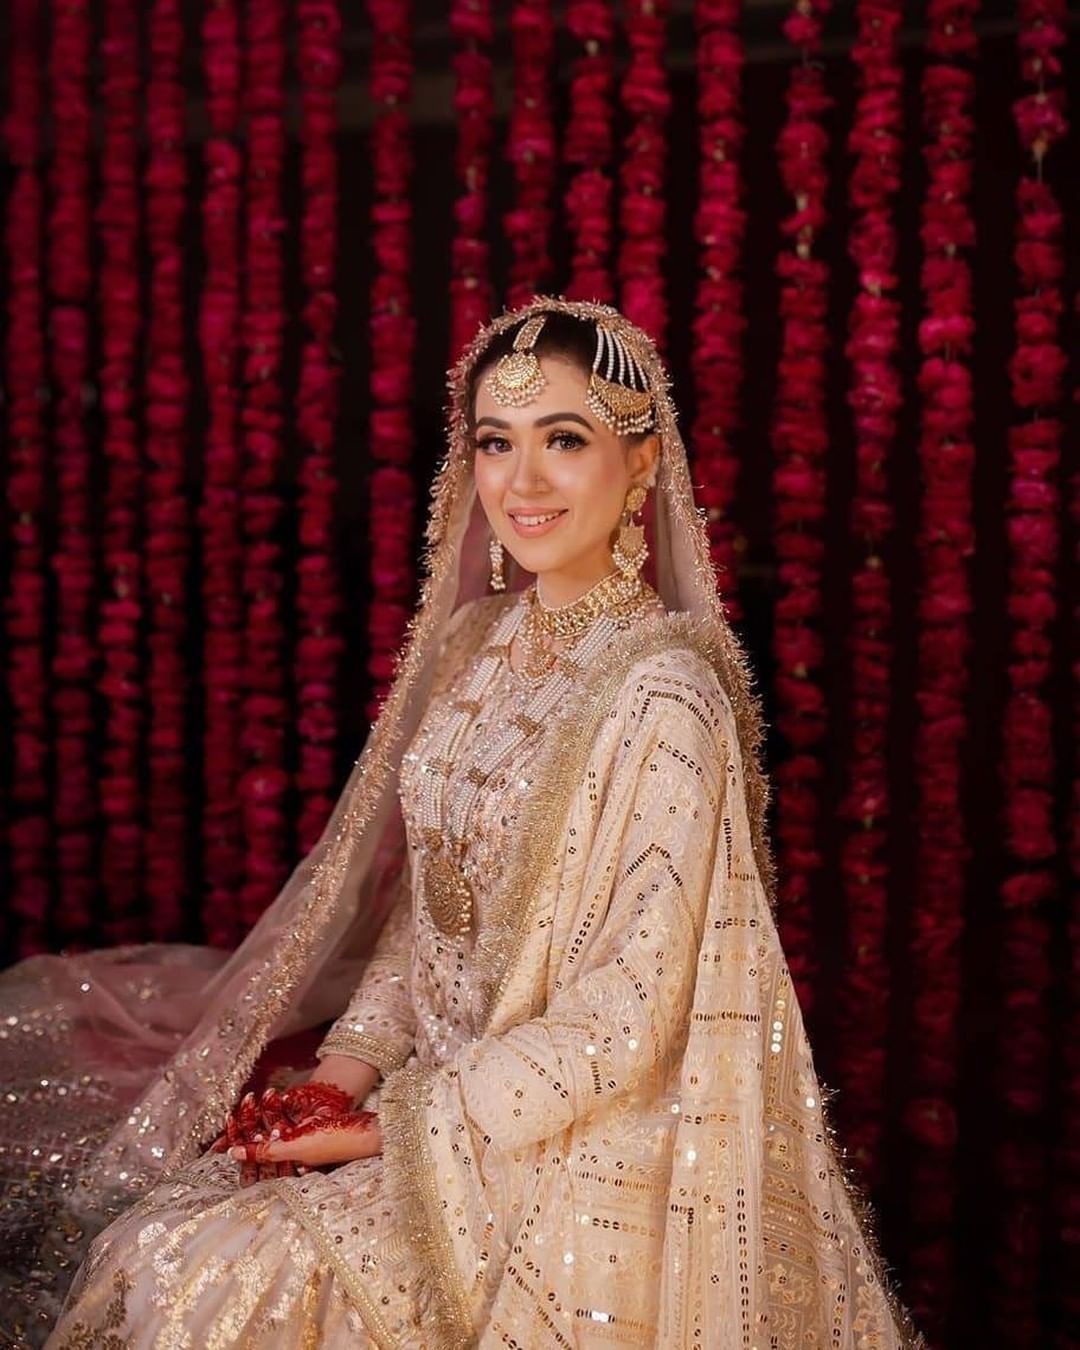 muslim bridal outfit